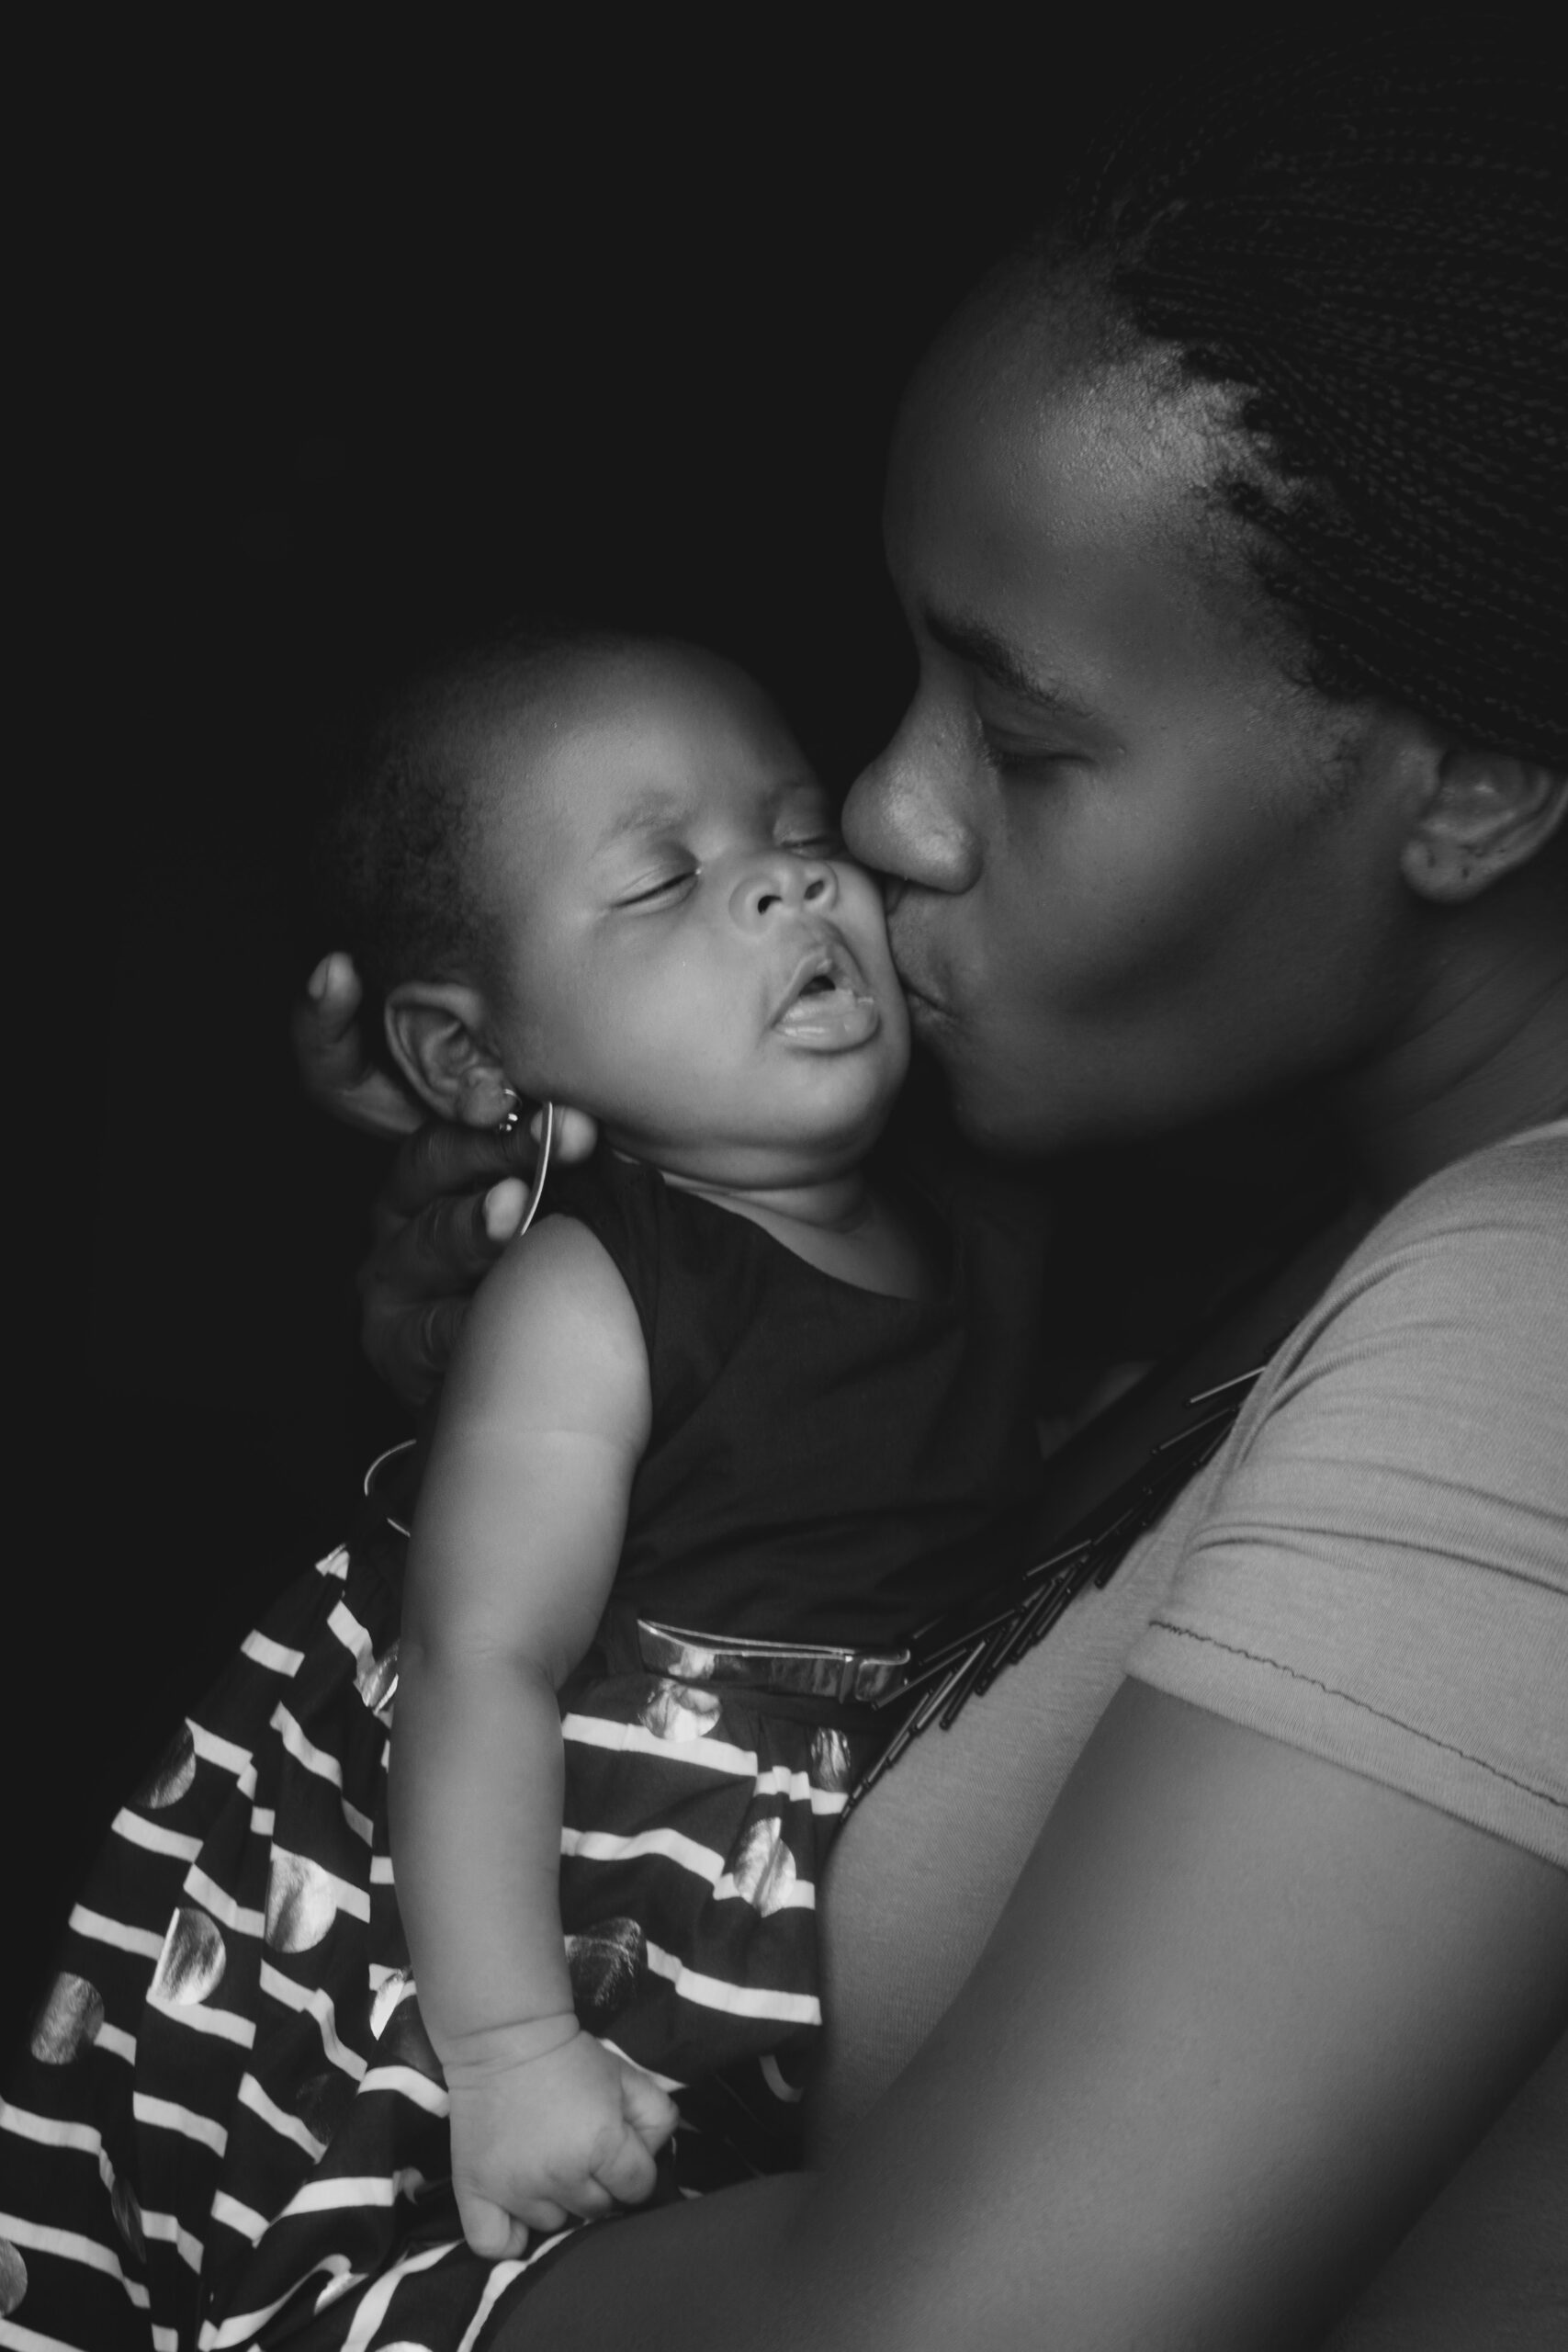 Rethinking narratives on breastfeeding in public space